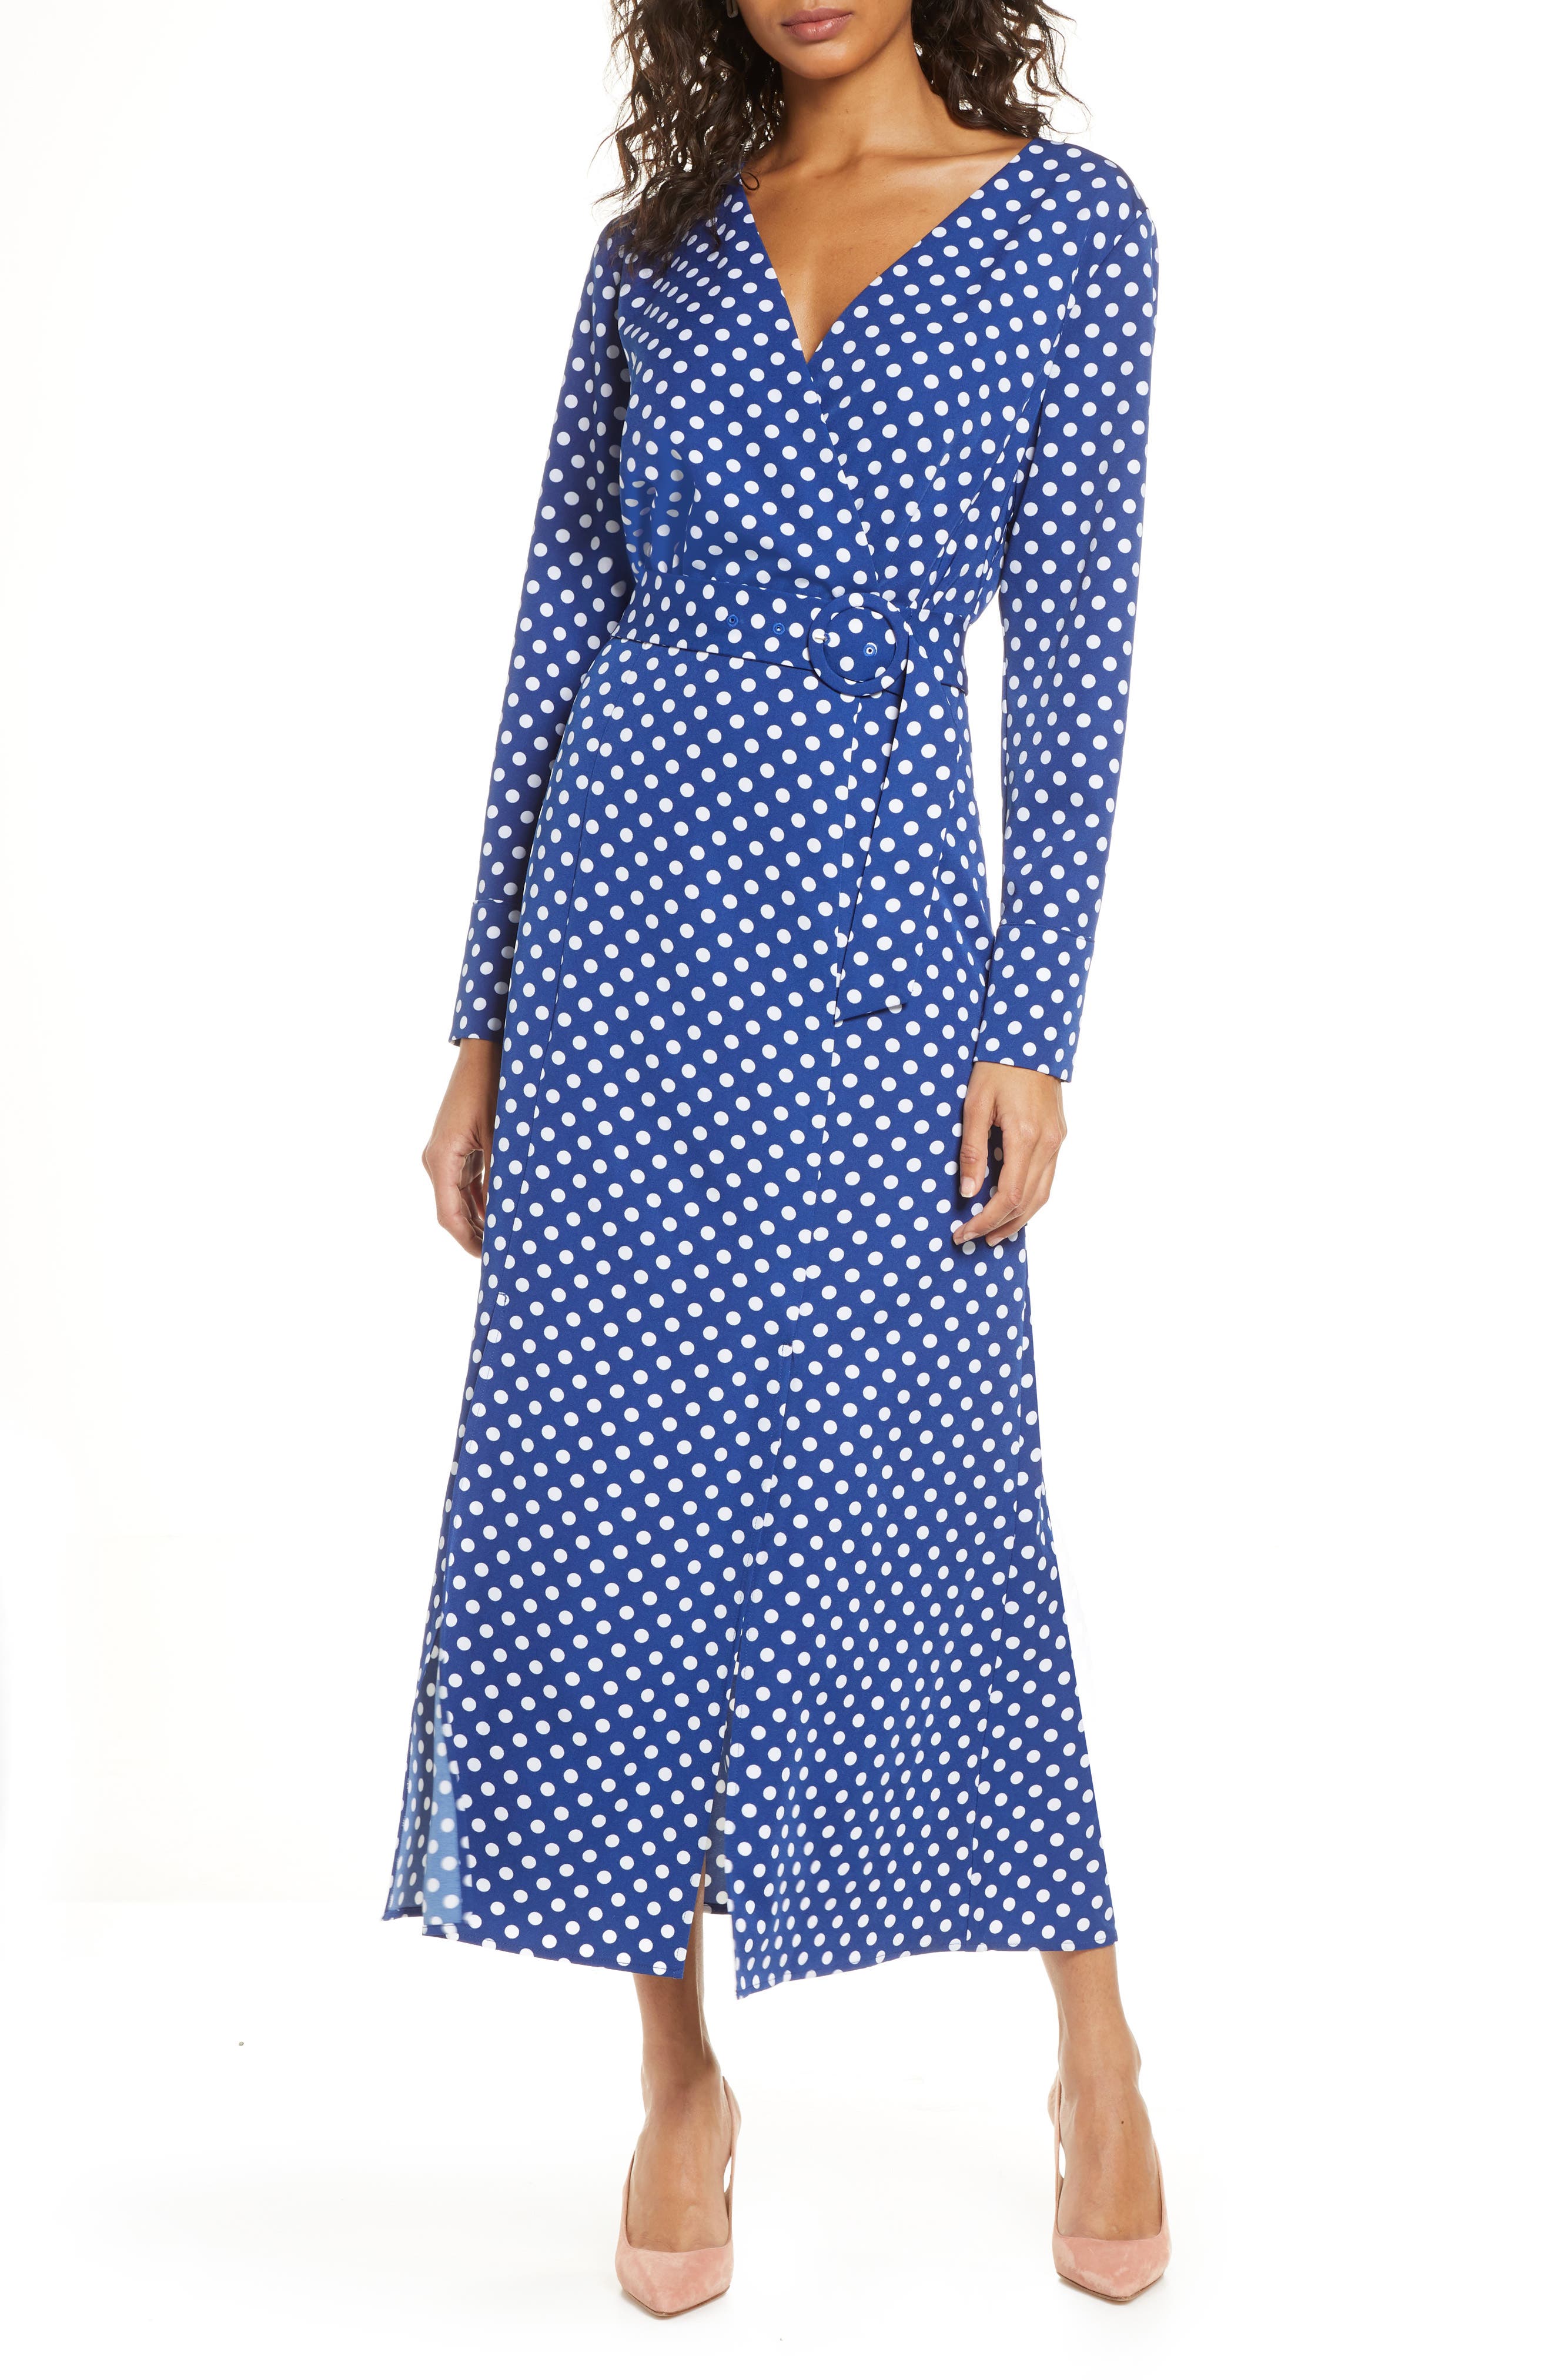 long sleeve polka dot dress